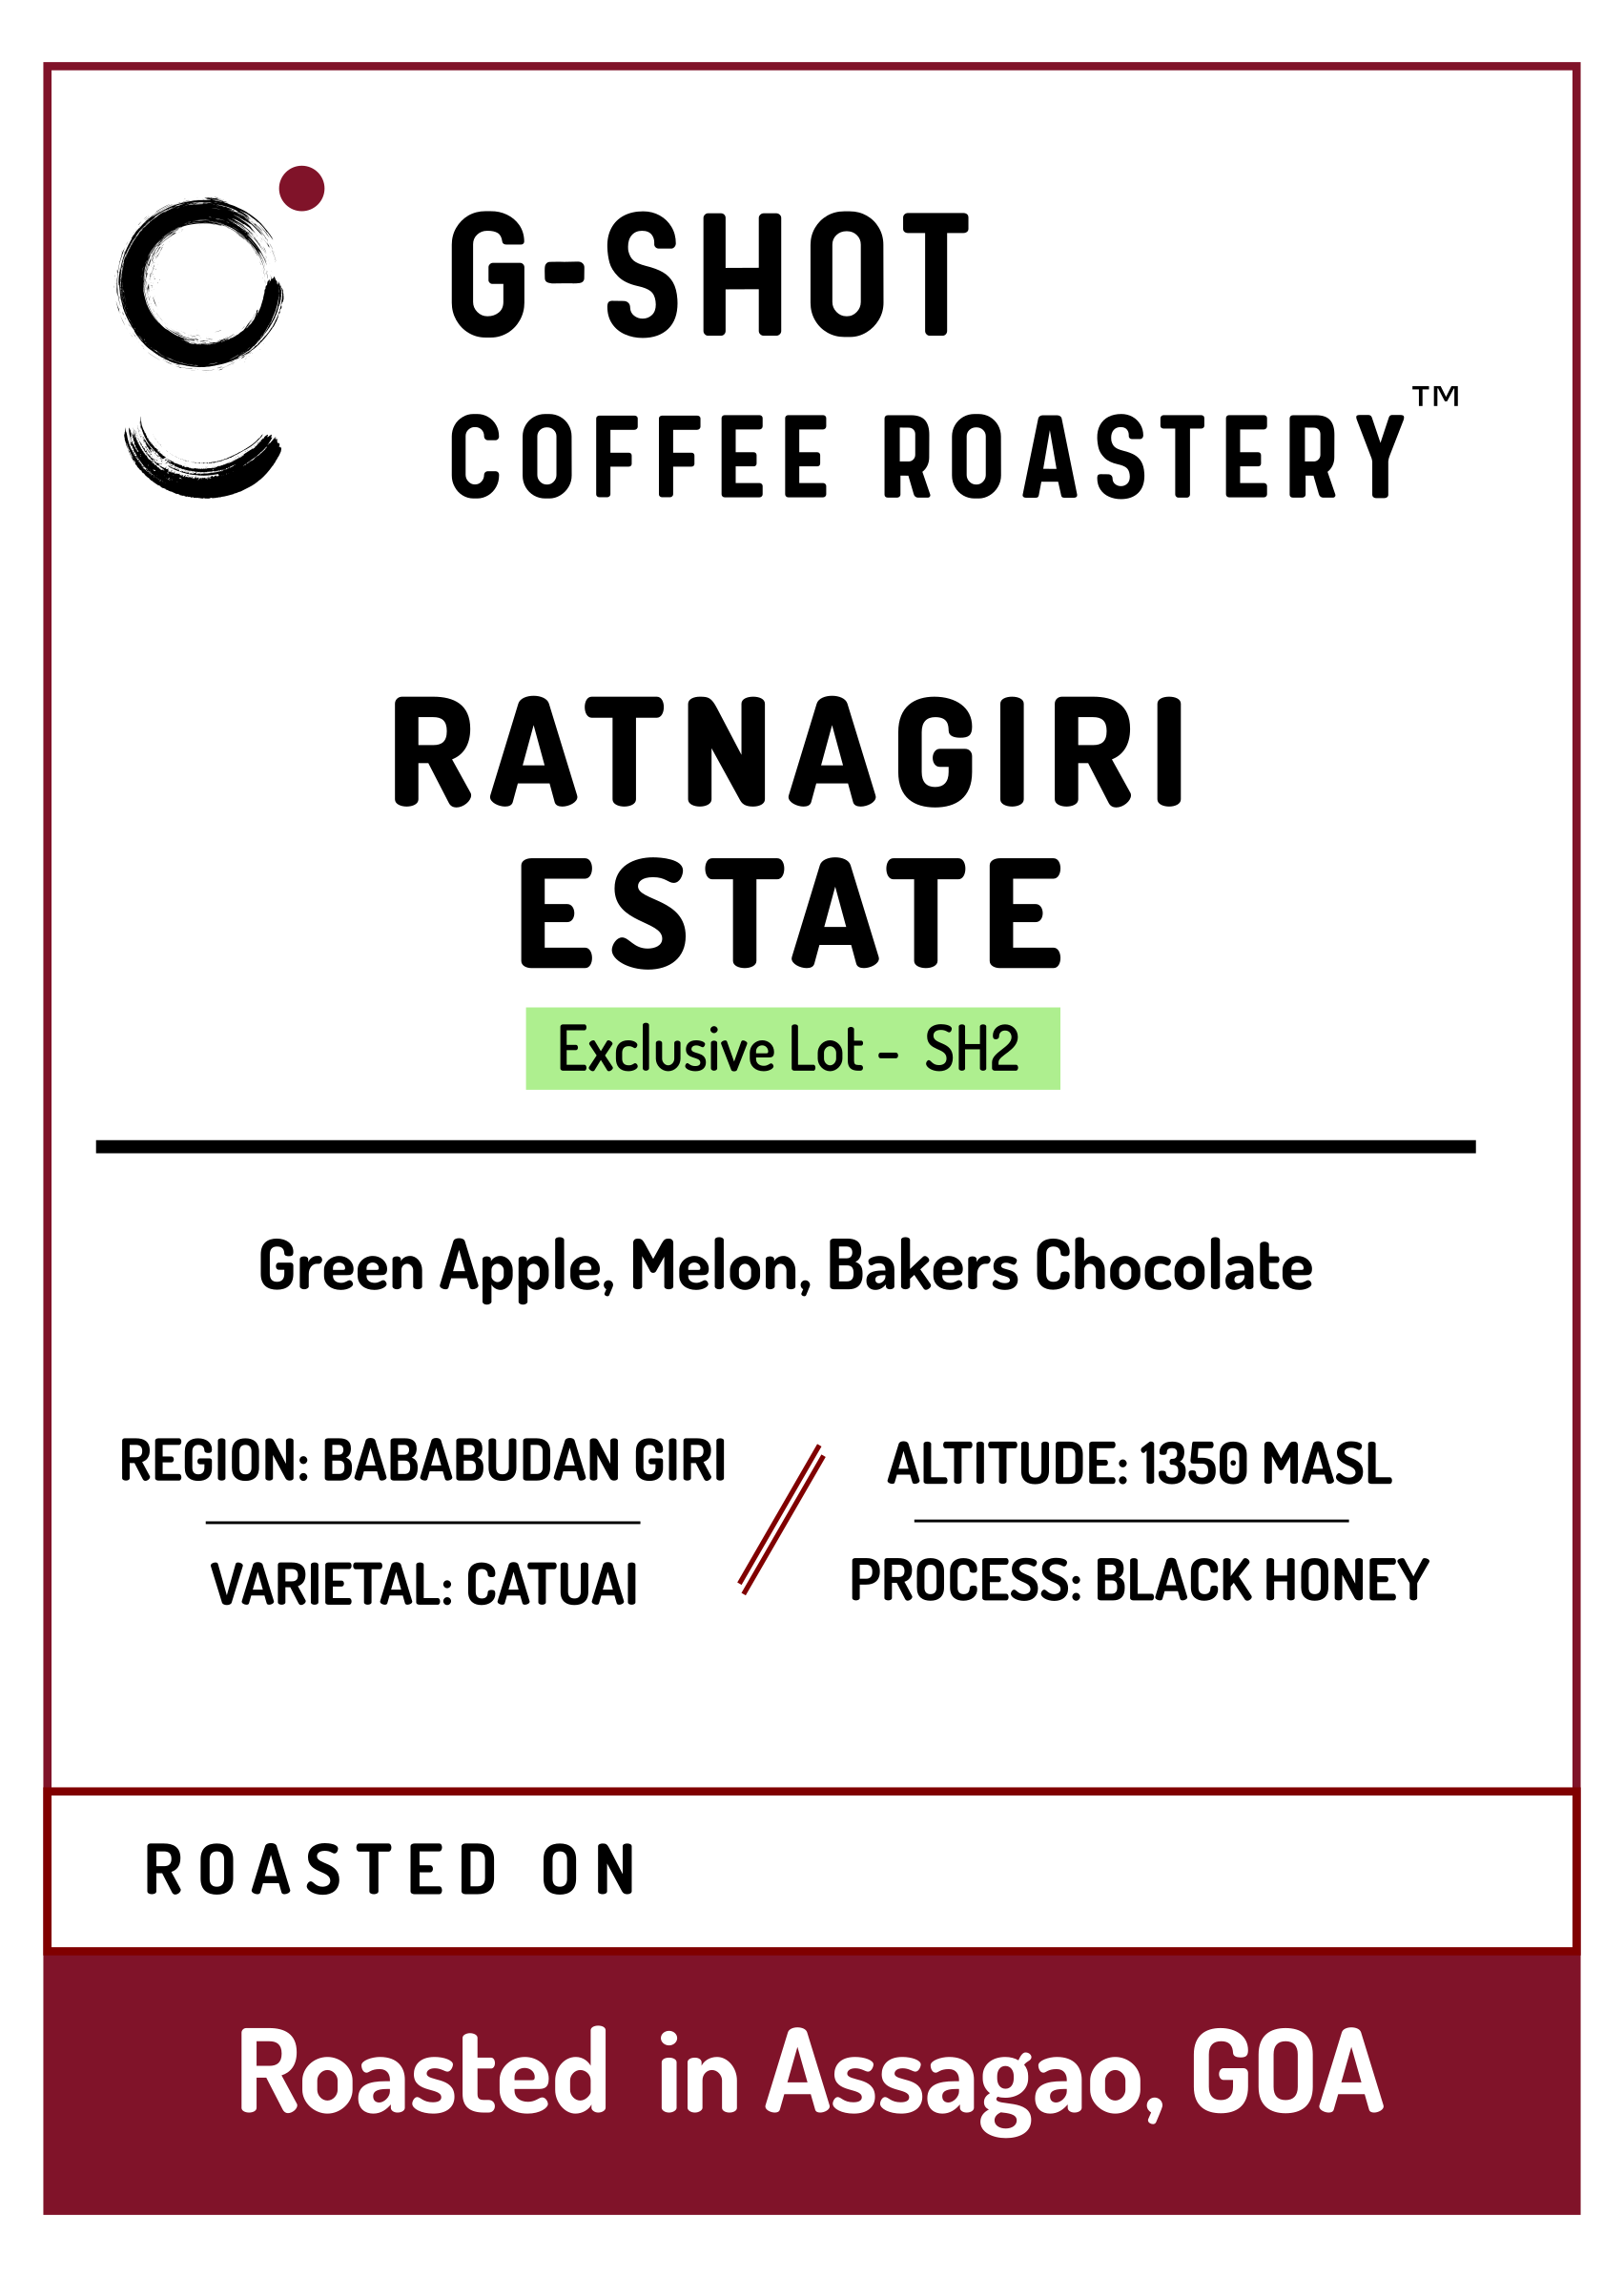 Ratnagiri Estate "Black Honey" - Microlot SH2